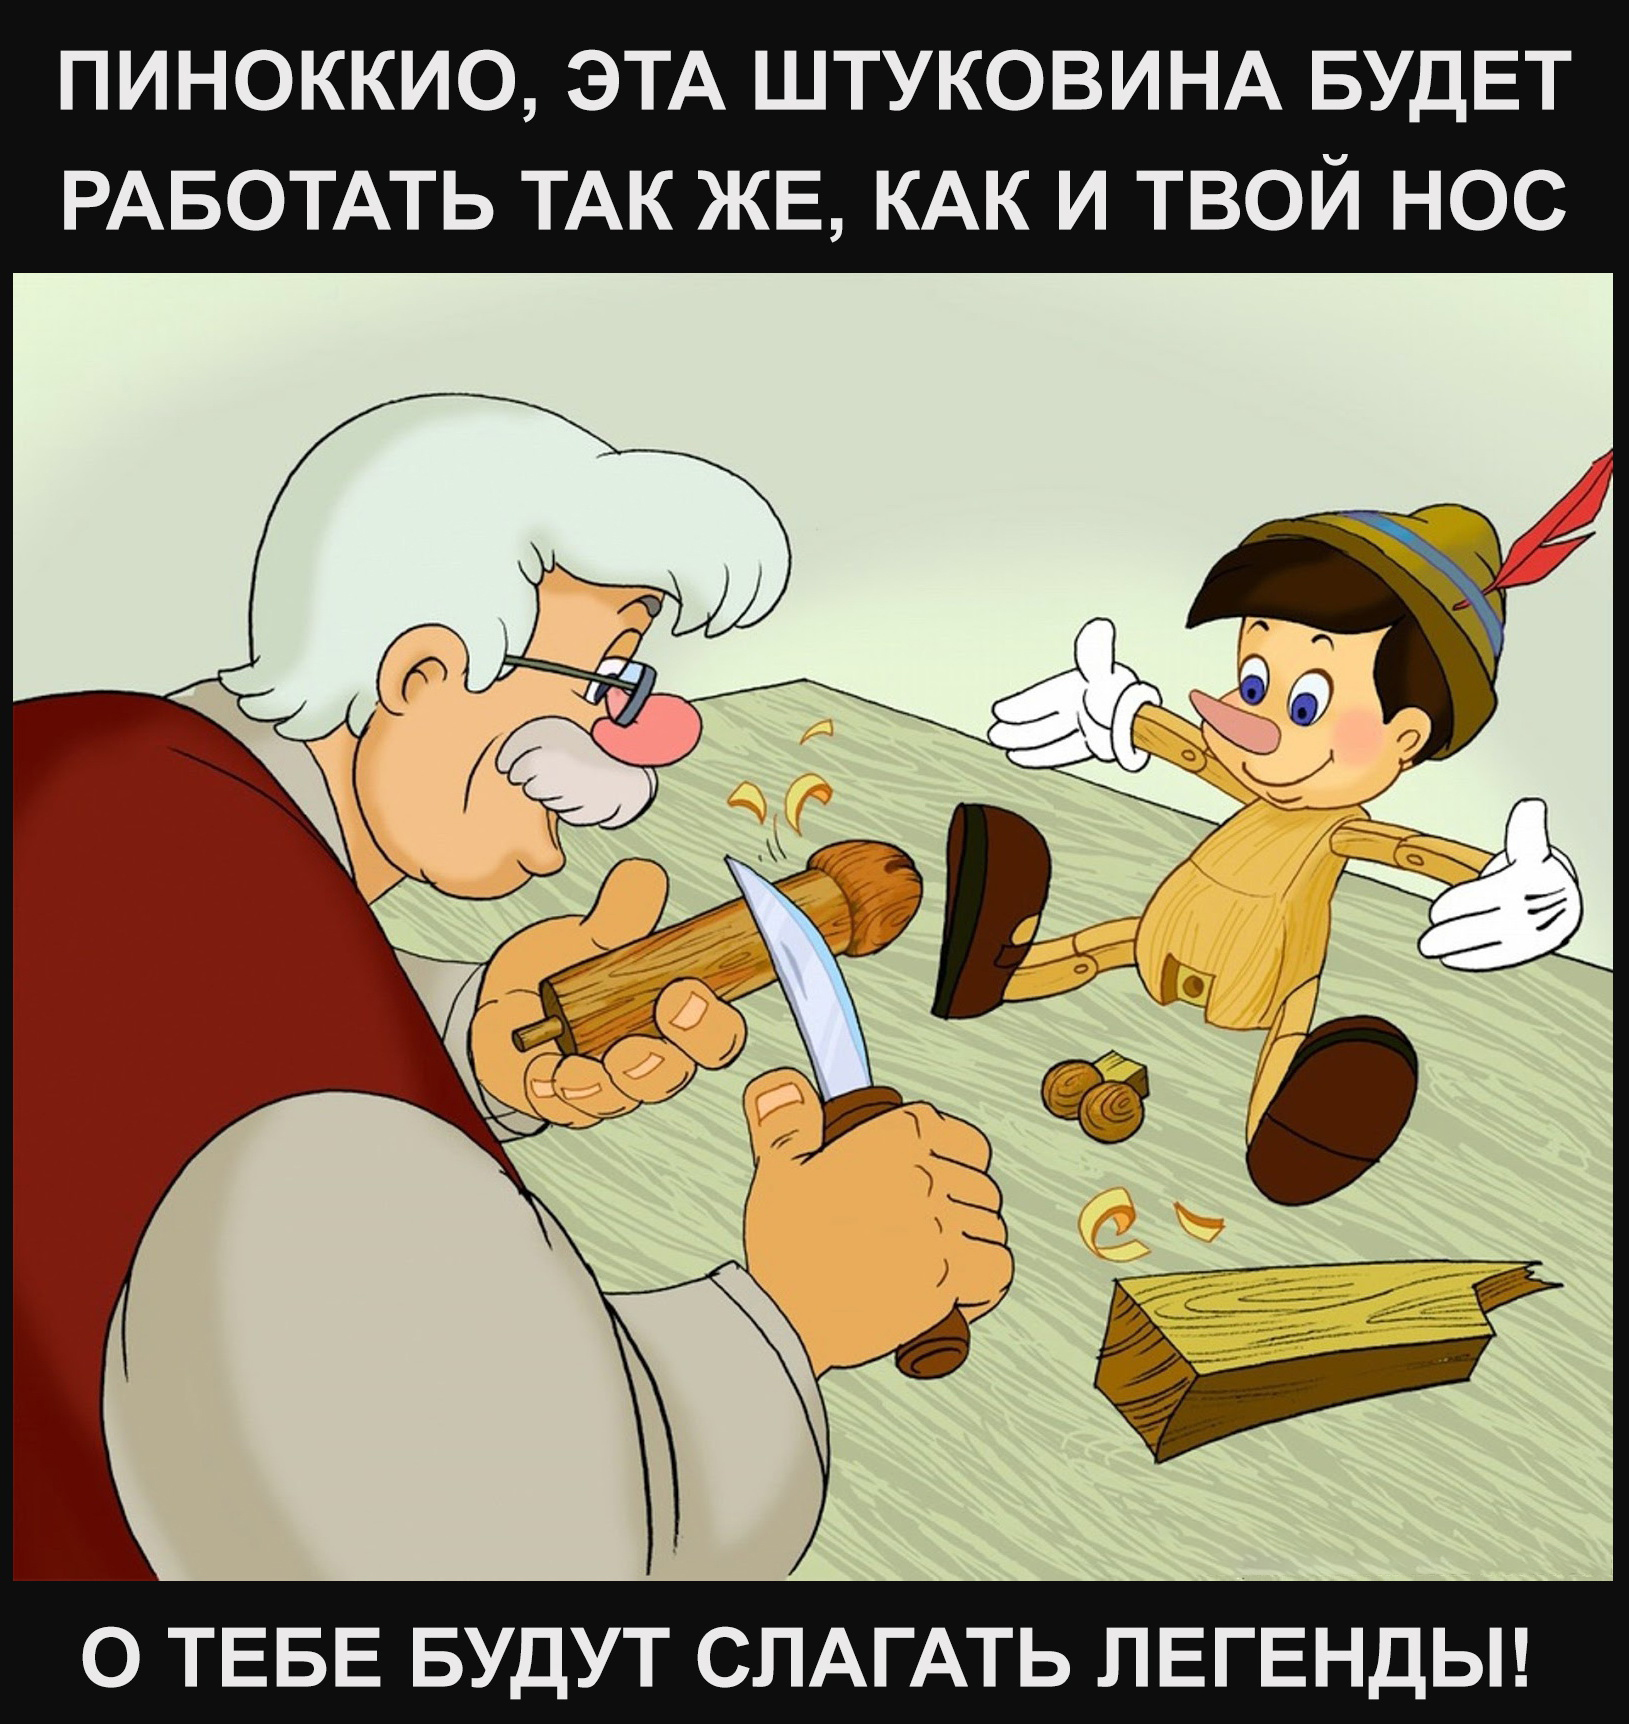 Pinocchio meme dirty